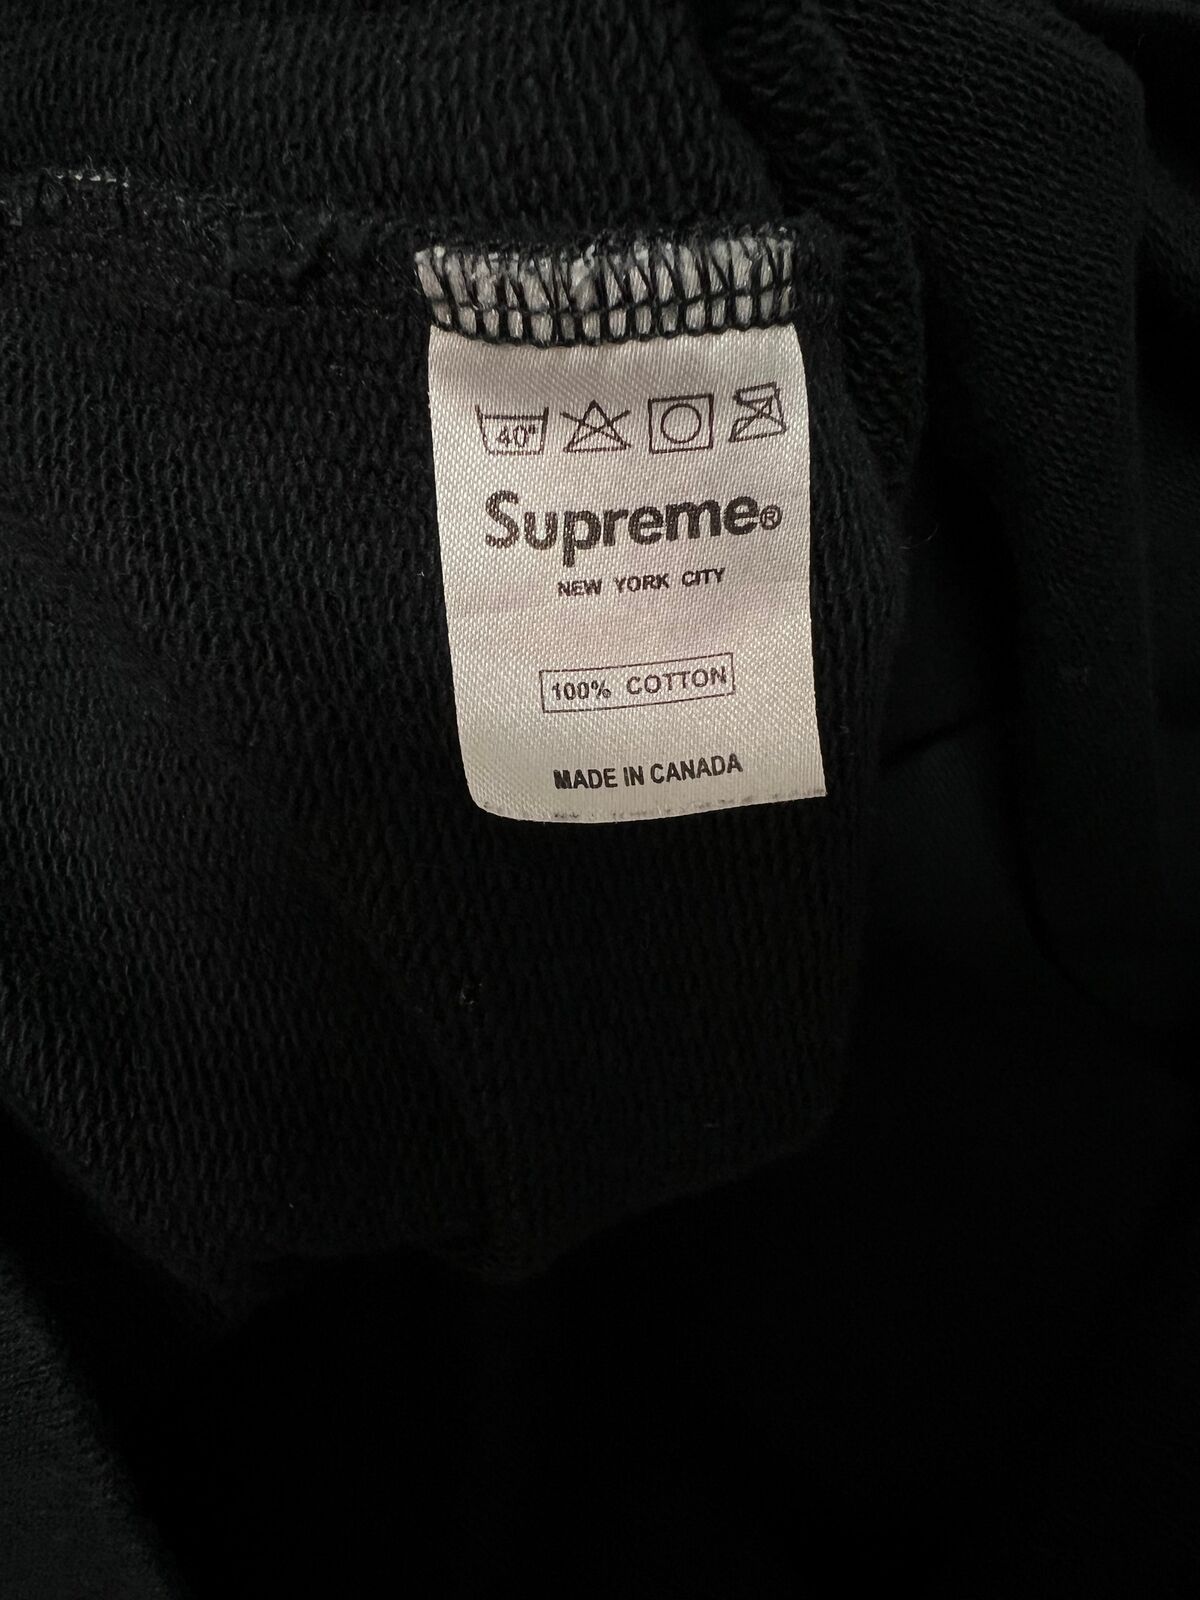 Supreme box logo hoodie Screenprint Black M 2006 | eBay